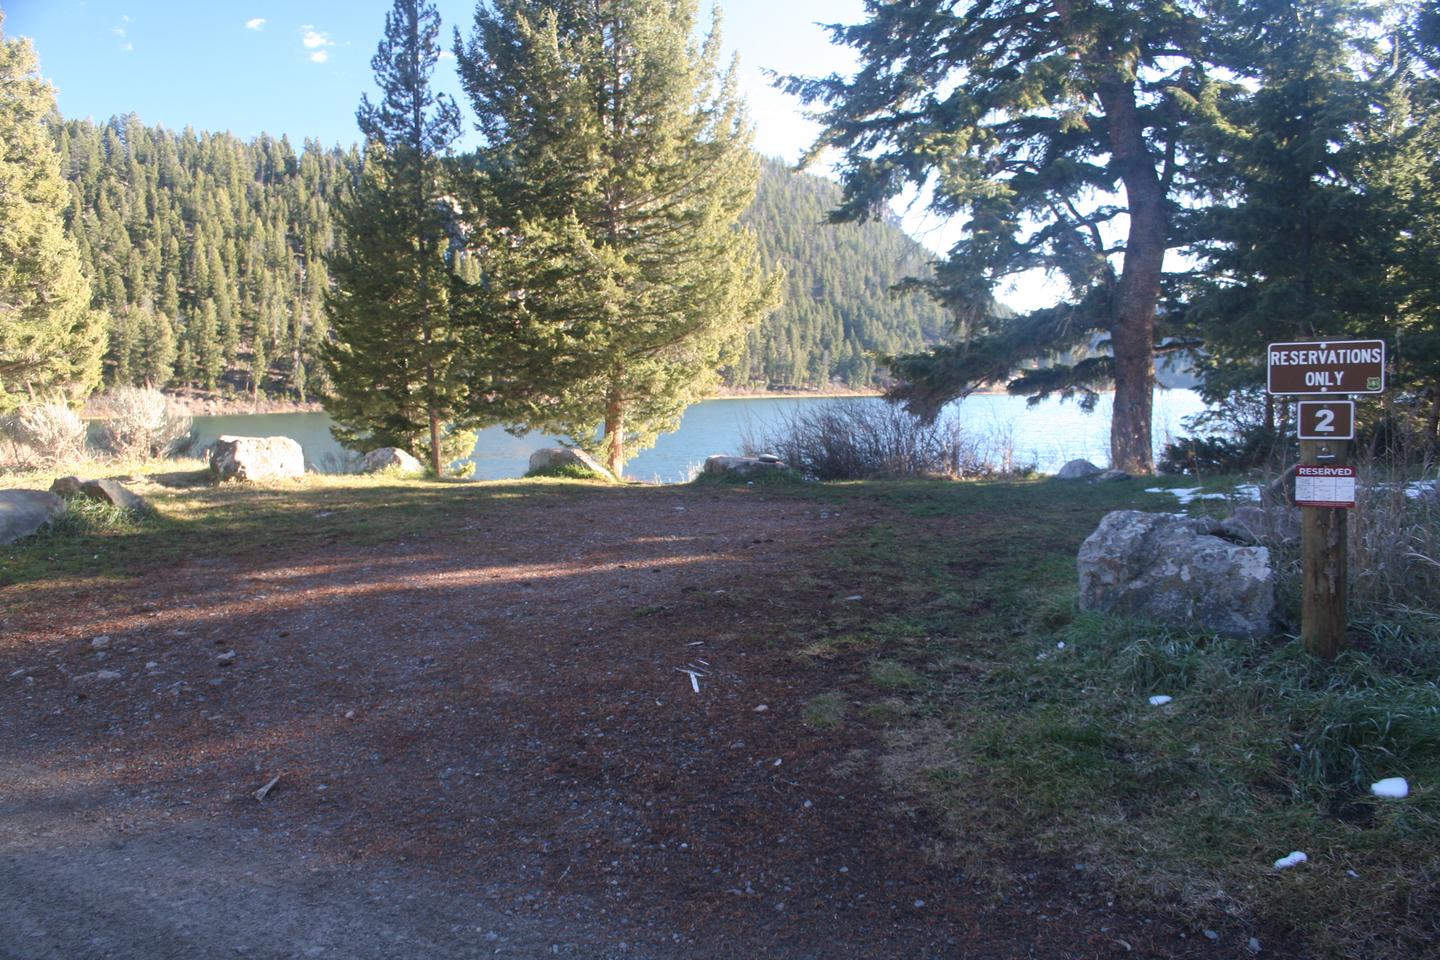 campsite 2parking